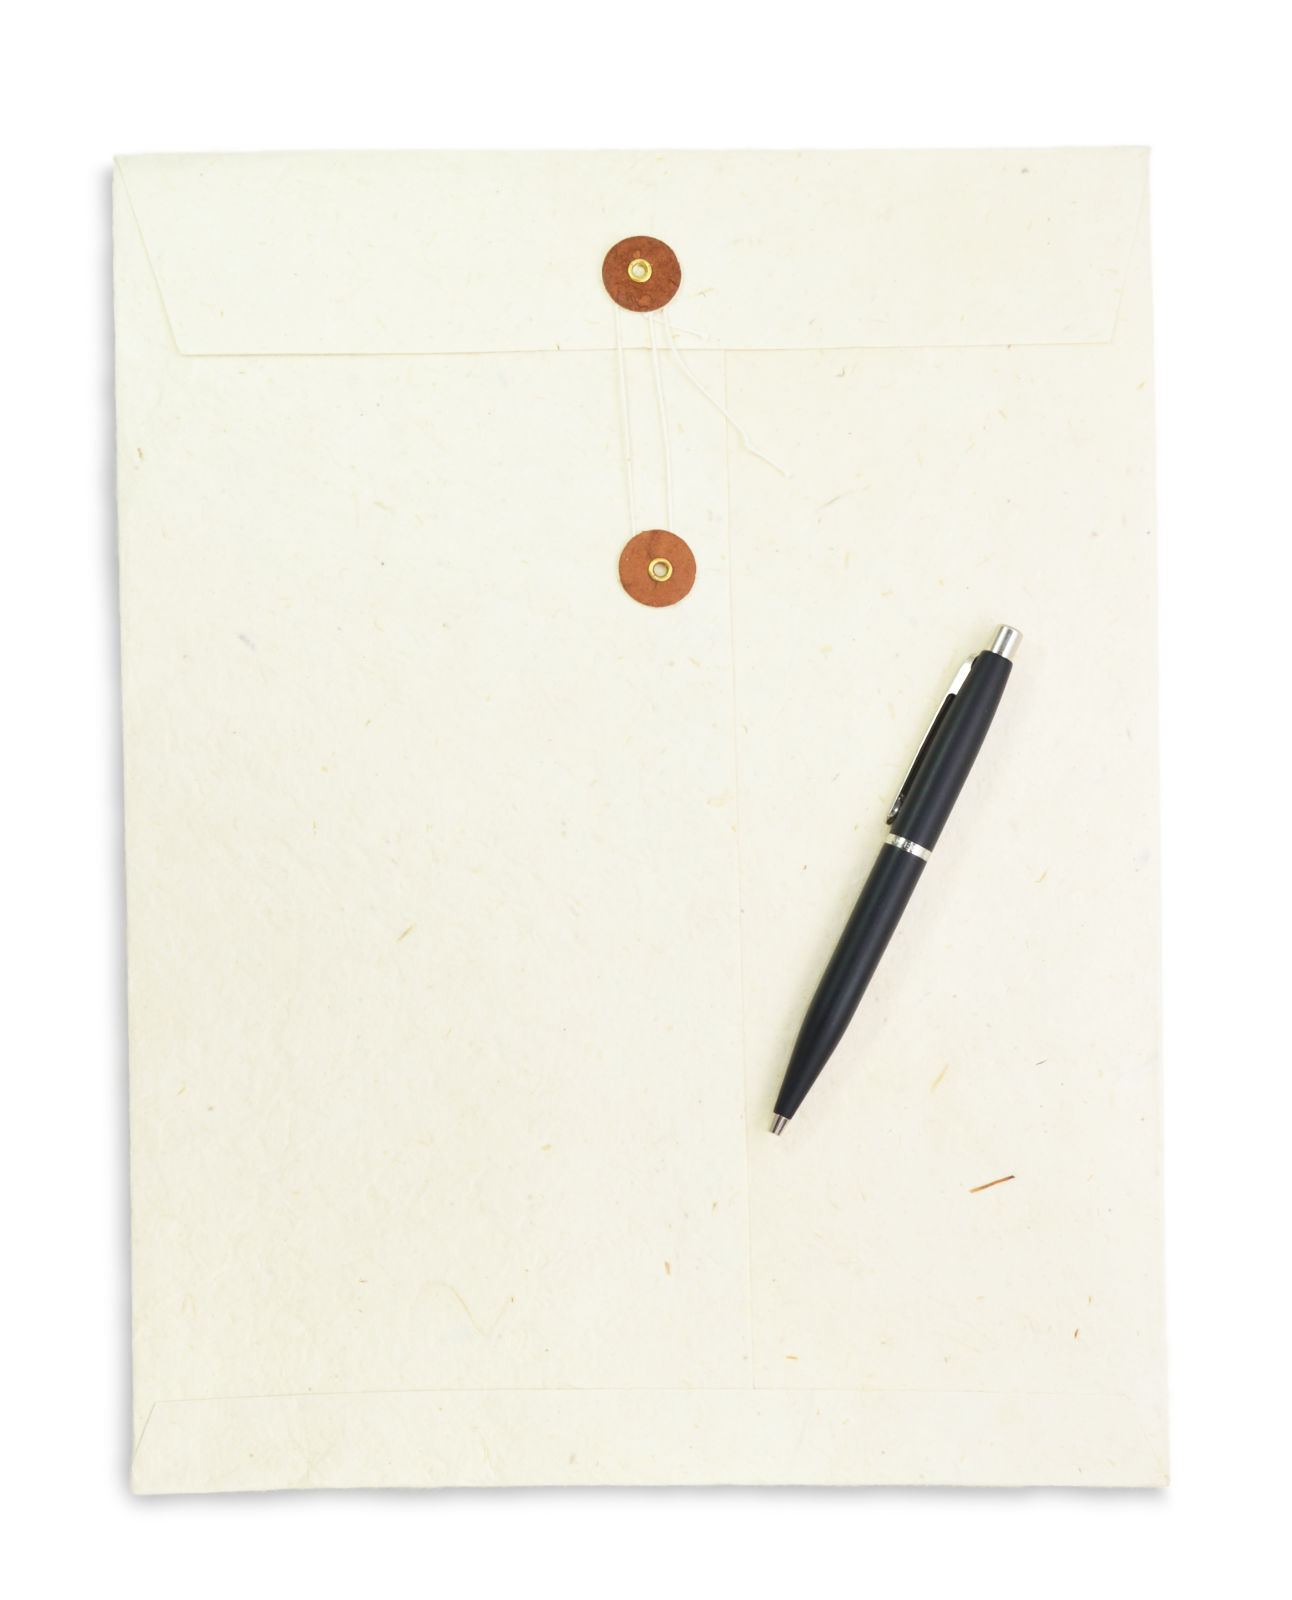 10x13 Inch Handmade Lokta Paper Folder fits US Letter Paper